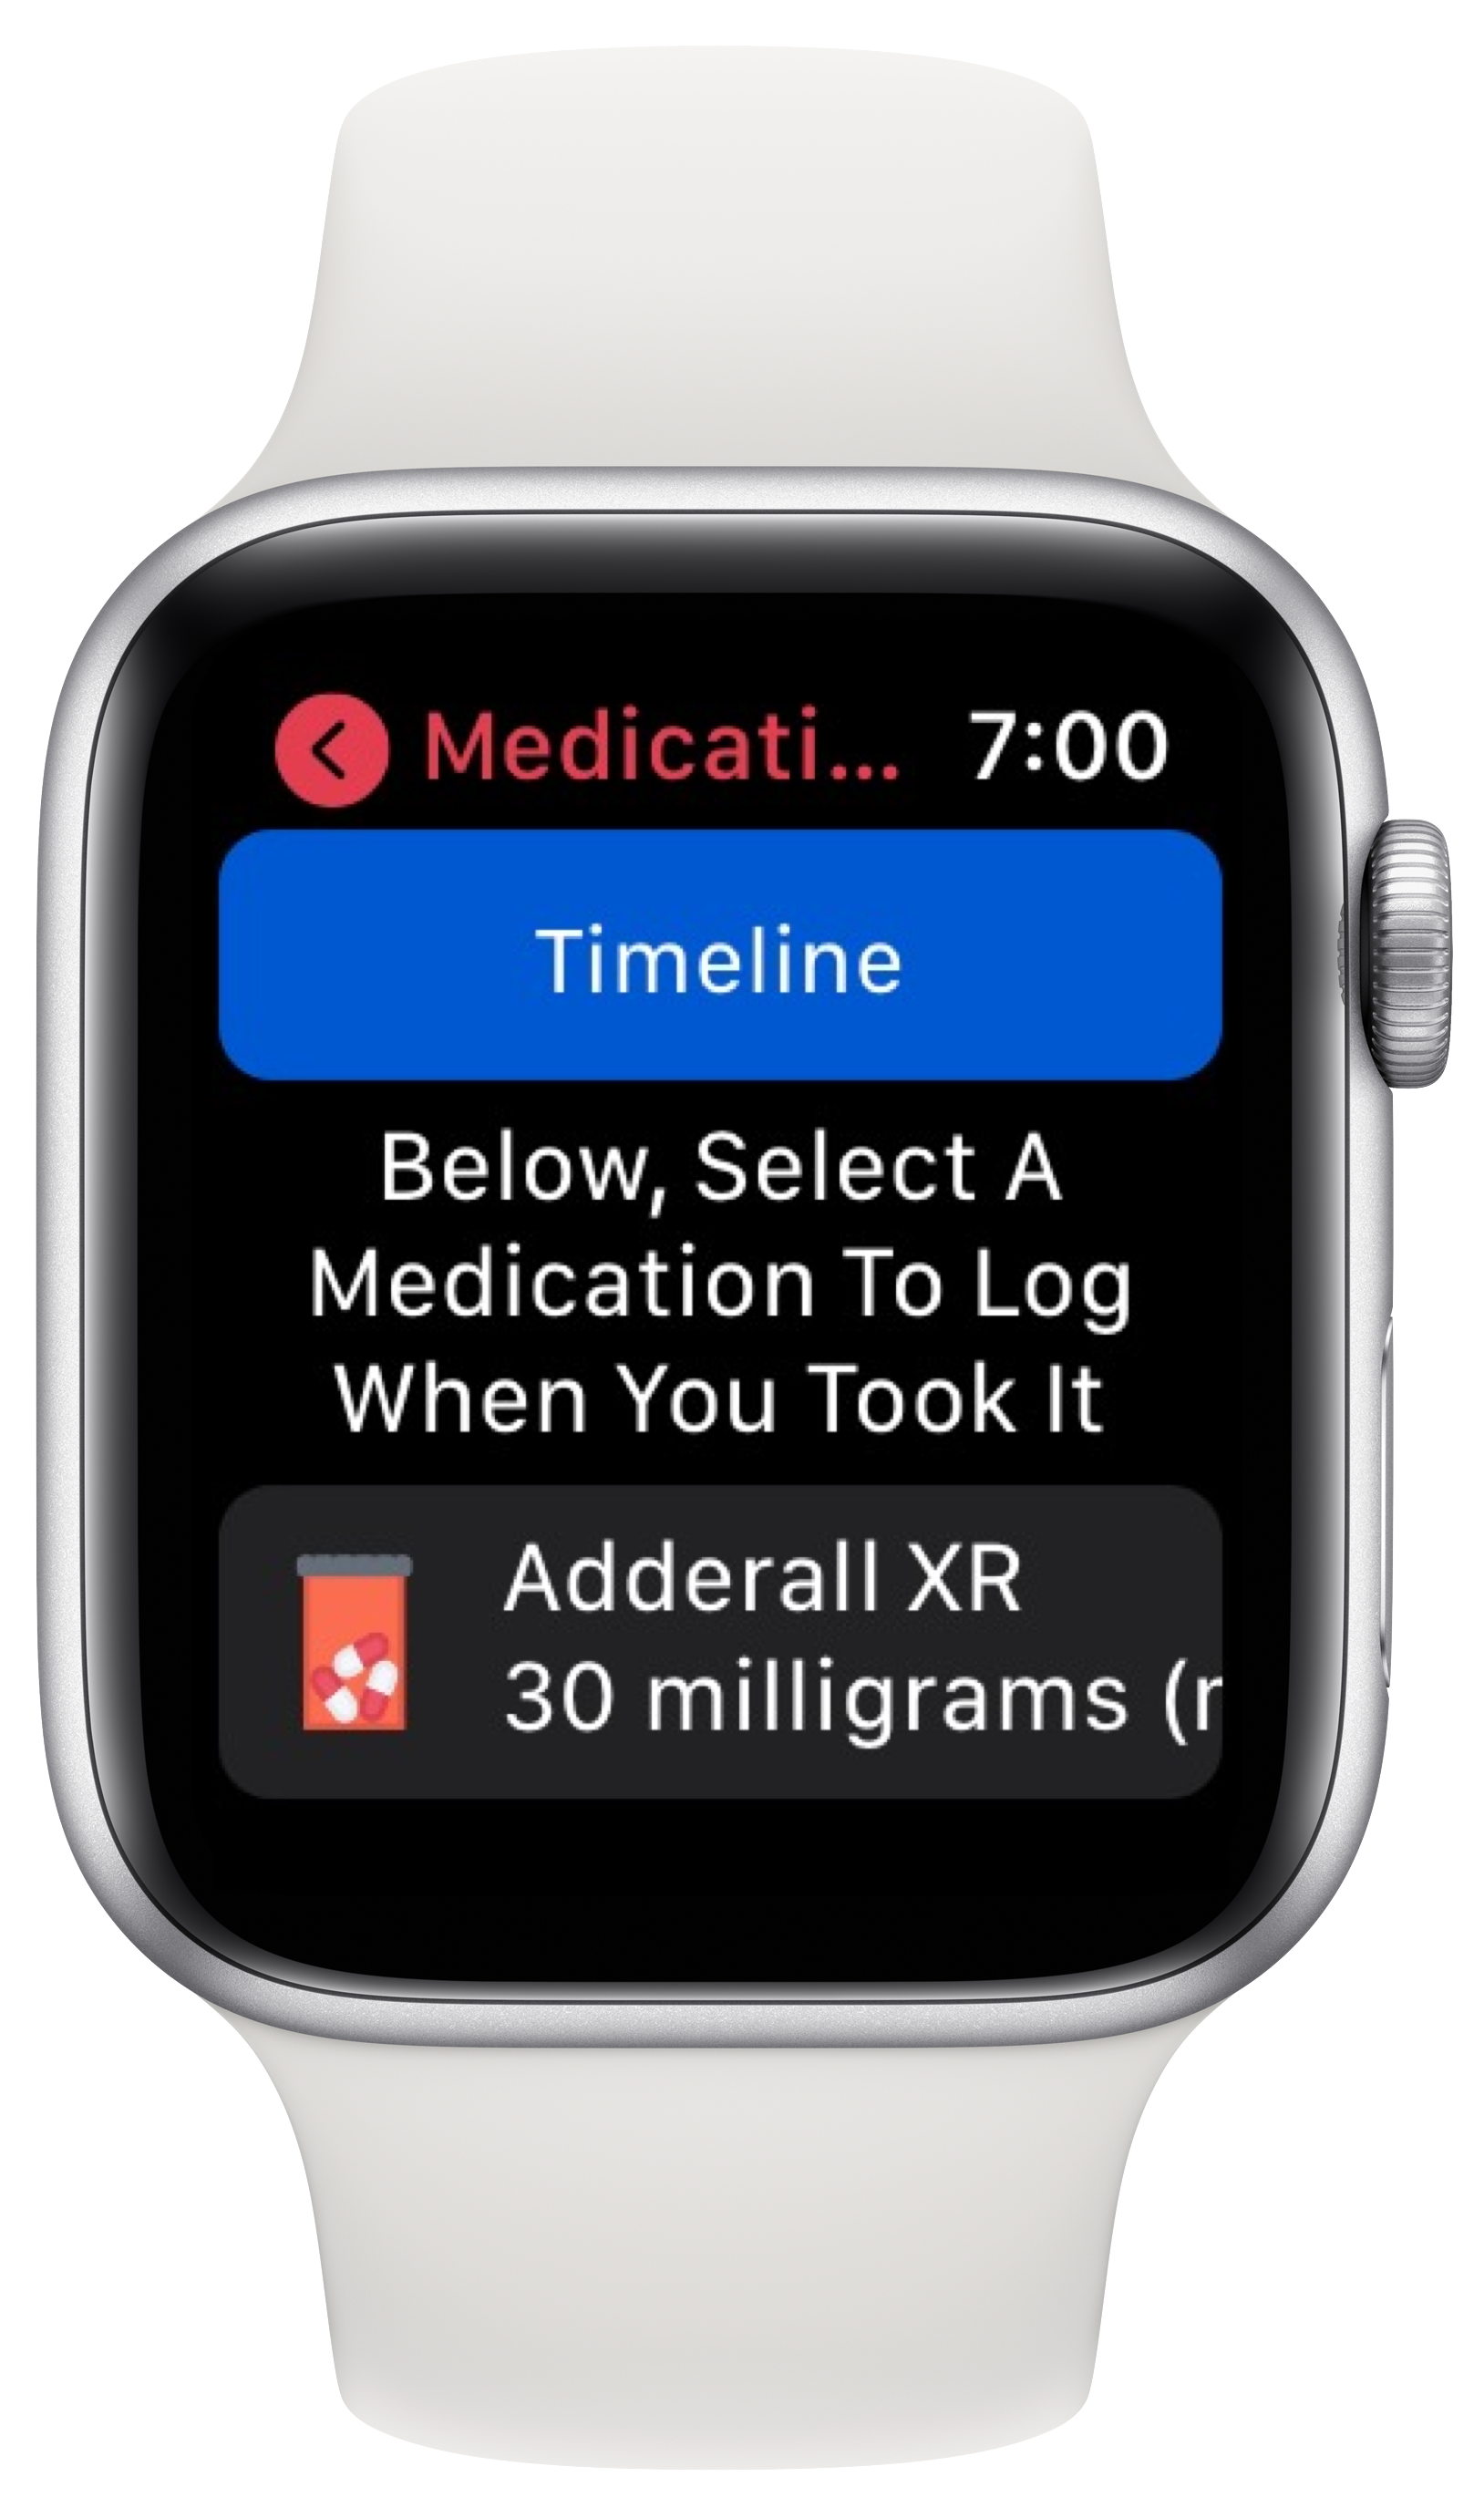 HeartCloud Sync Apple Watch app screenshot